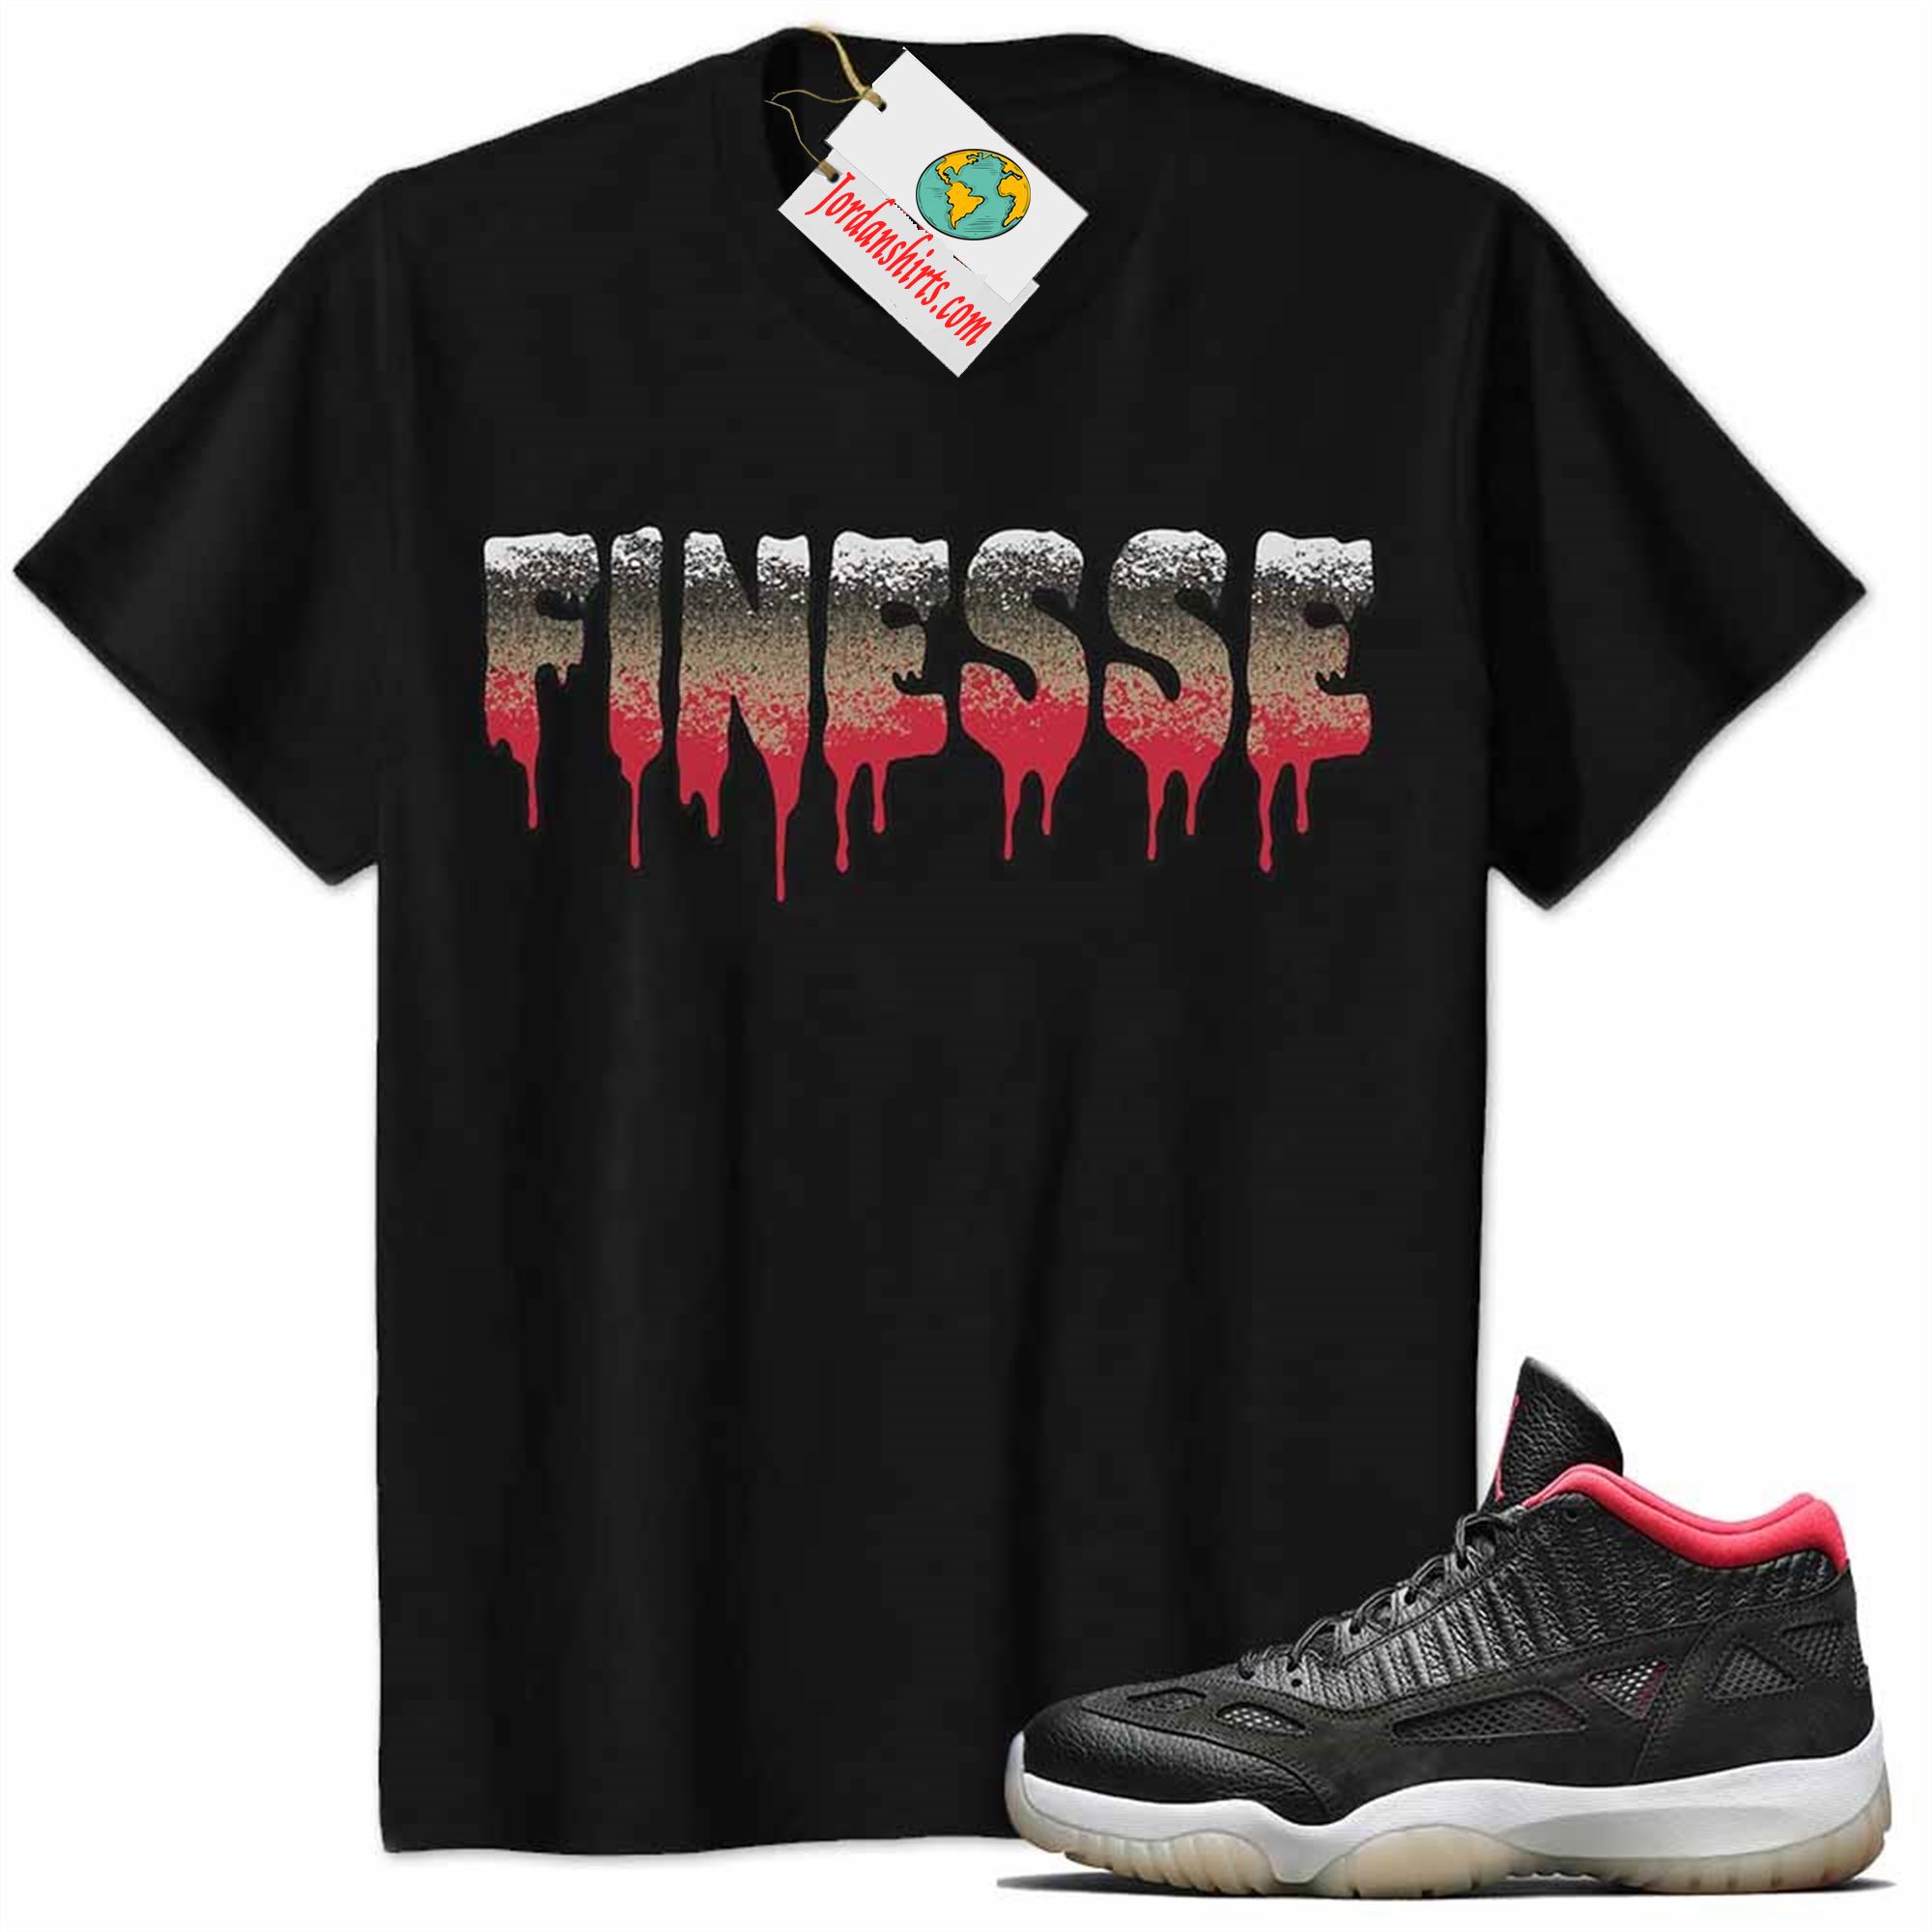 Jordan 11 Shirt, Jordan 11 Bred Shirt Finesse Drip Black Plus Size Up To 5xl